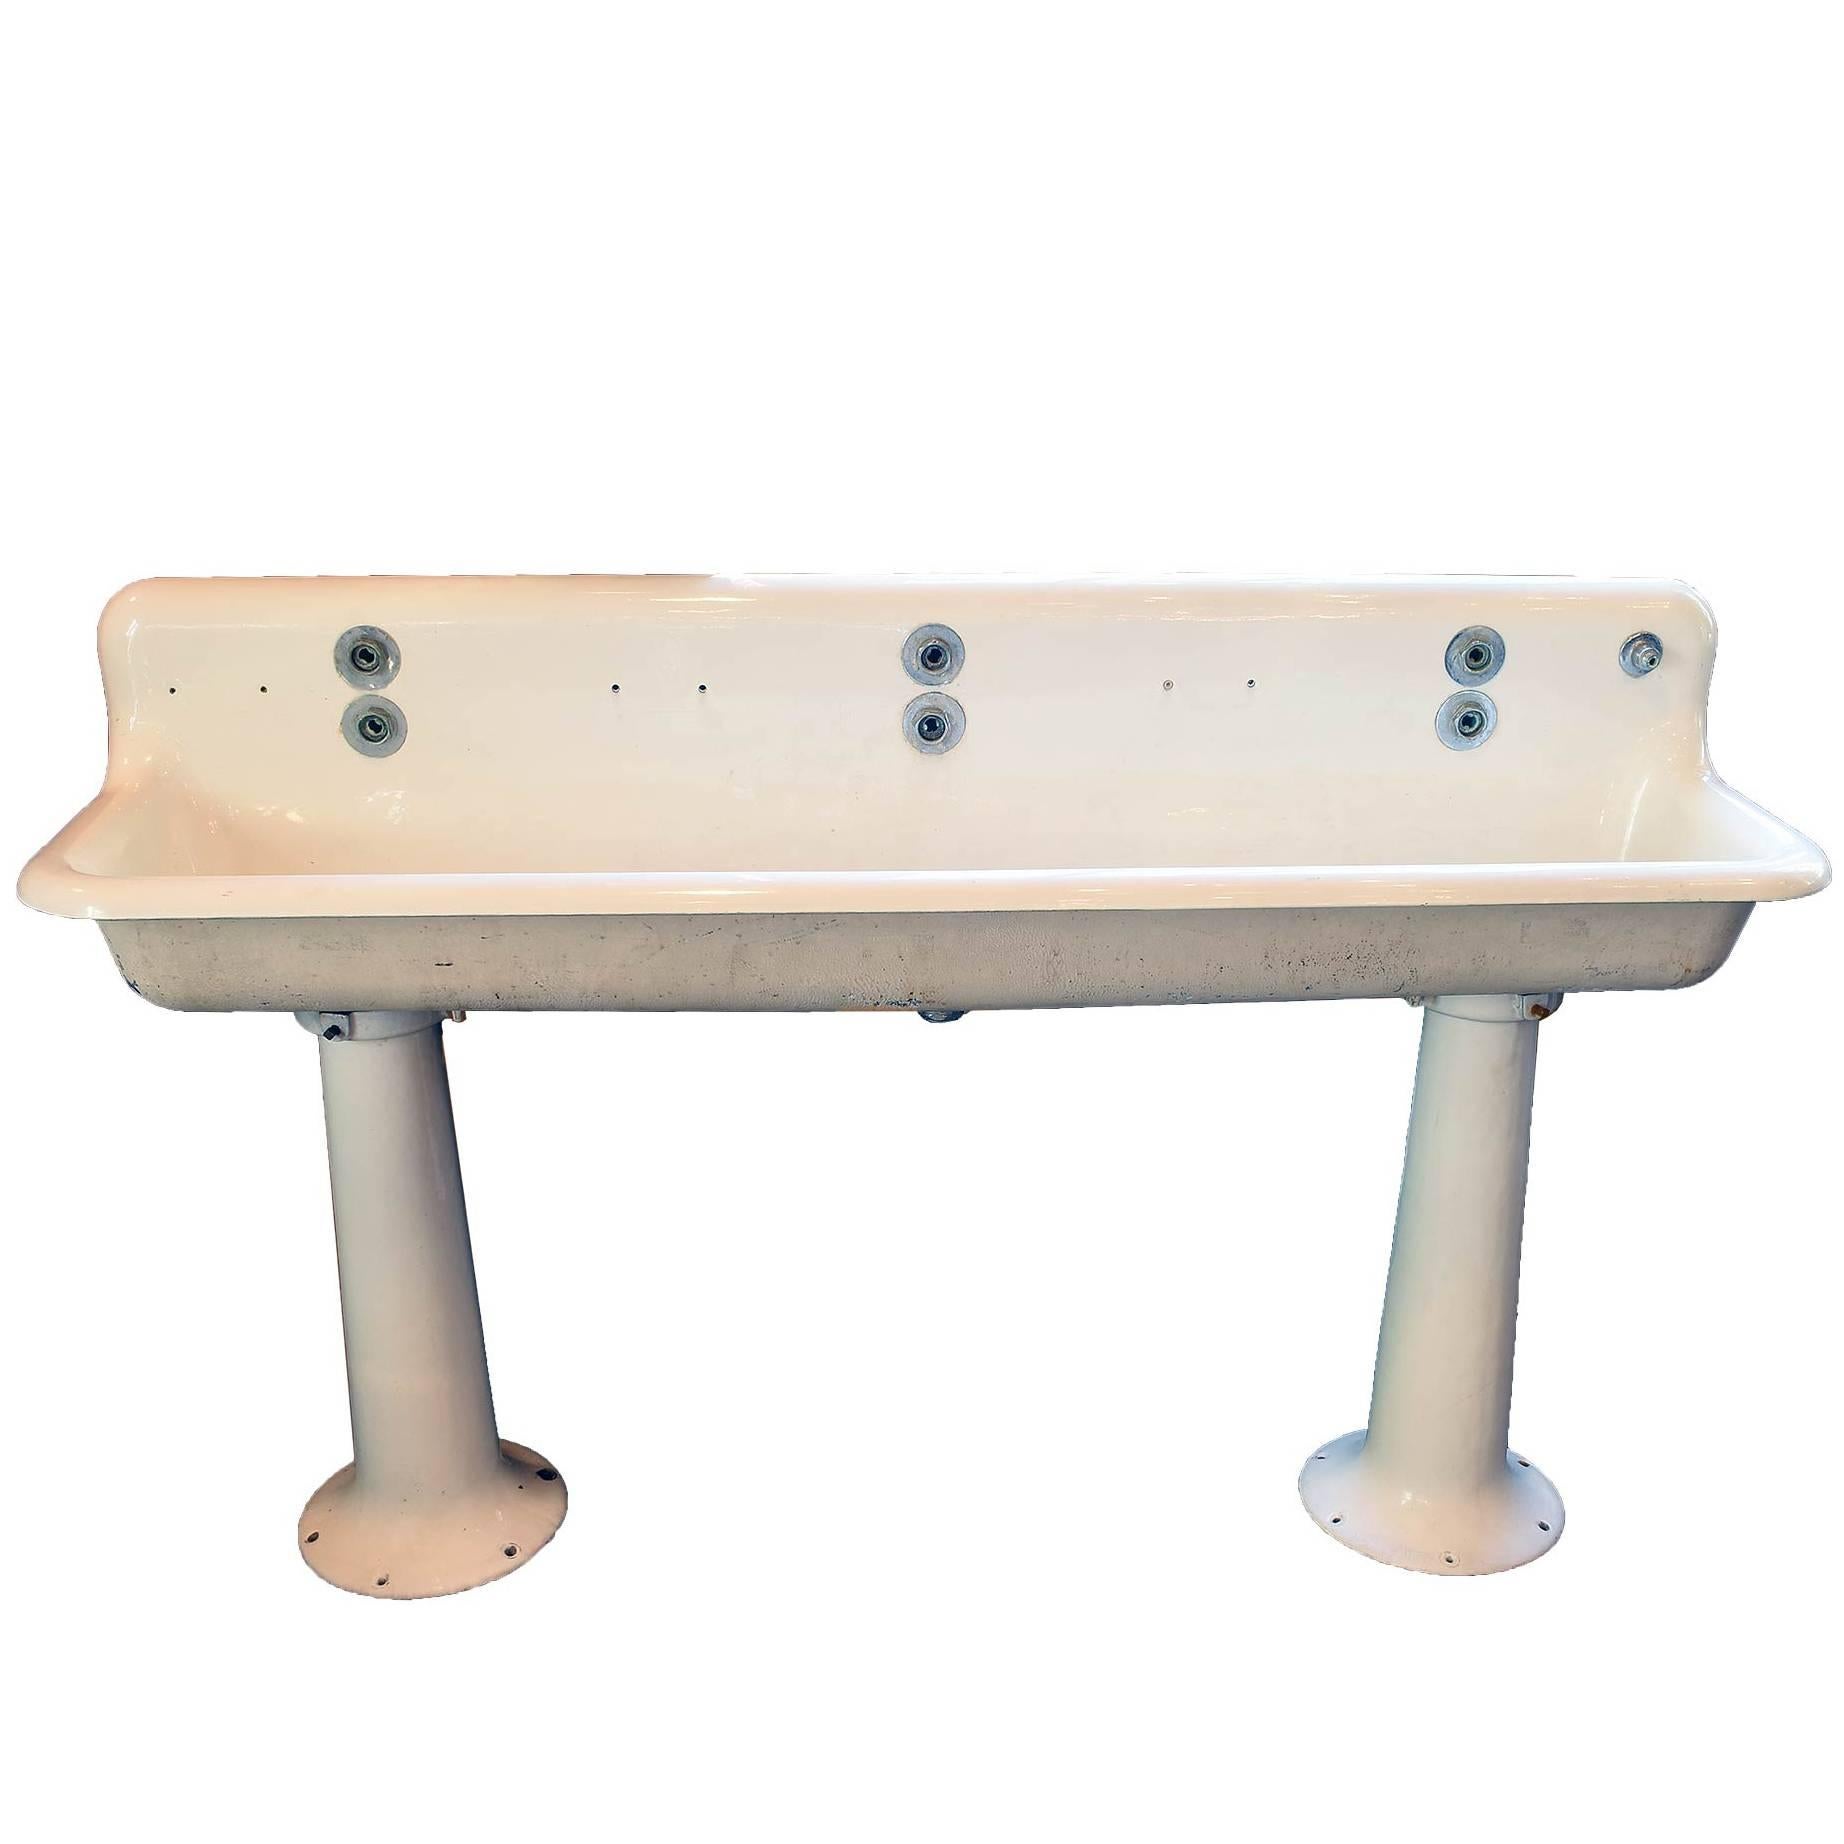 6' American Standard Porcelain Sink with Pedestals